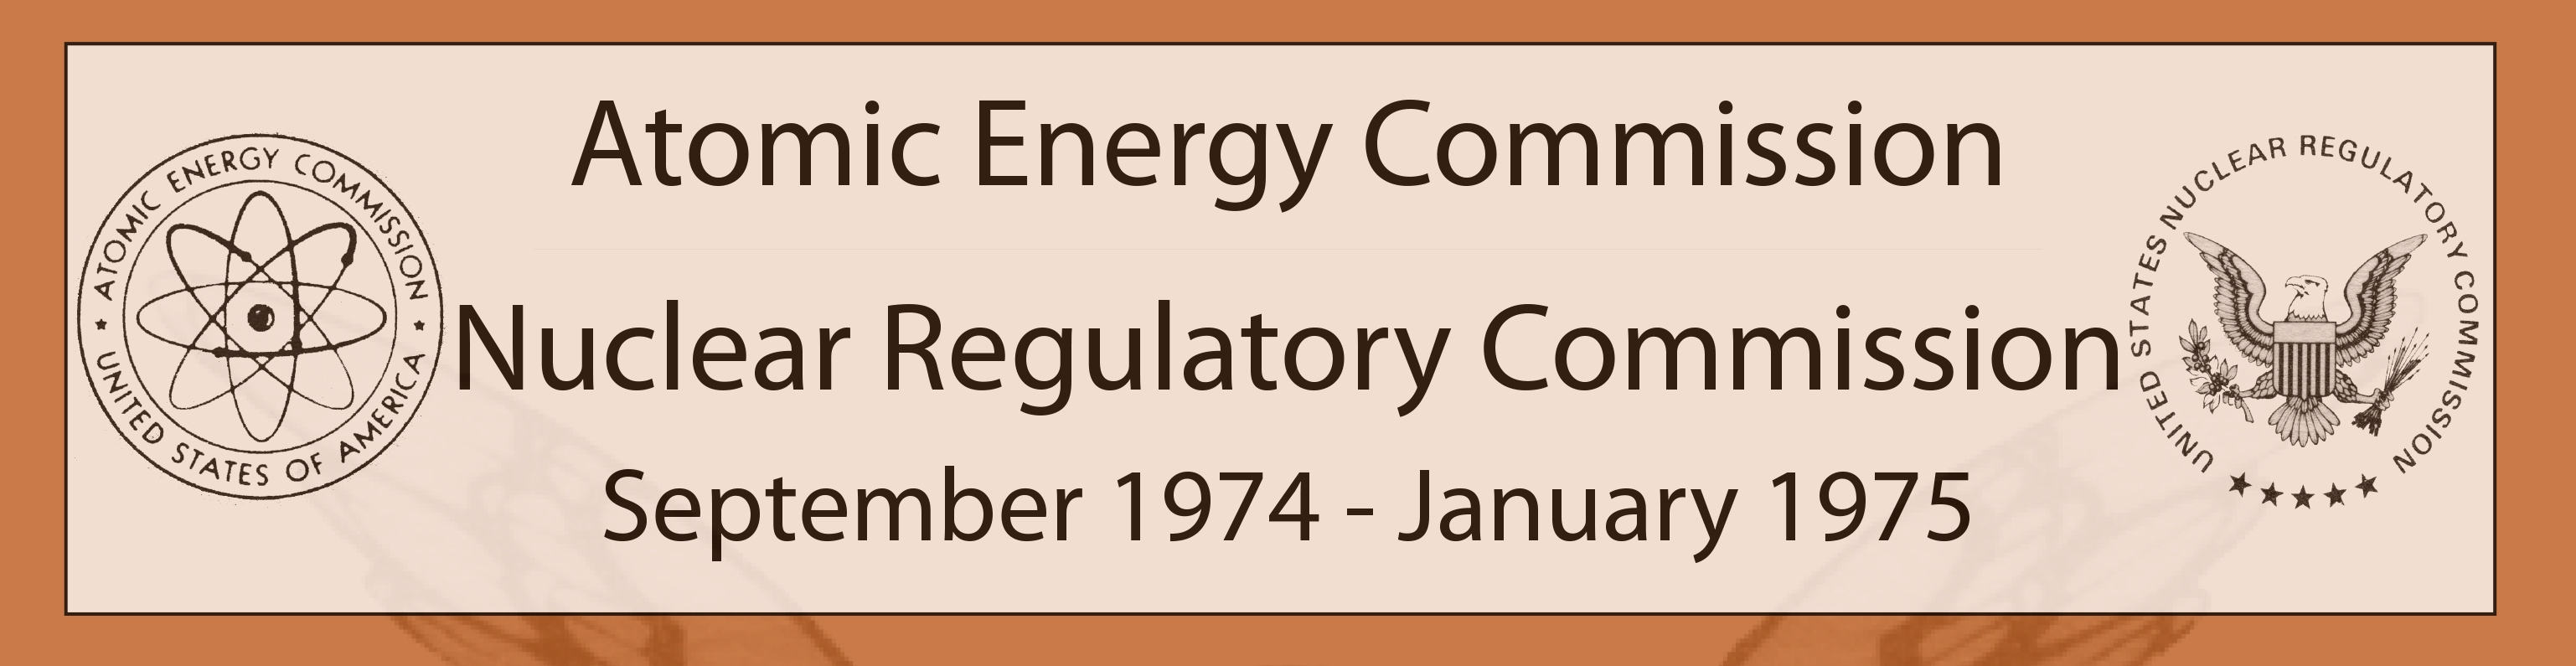 AEC NRC years 1974-1975